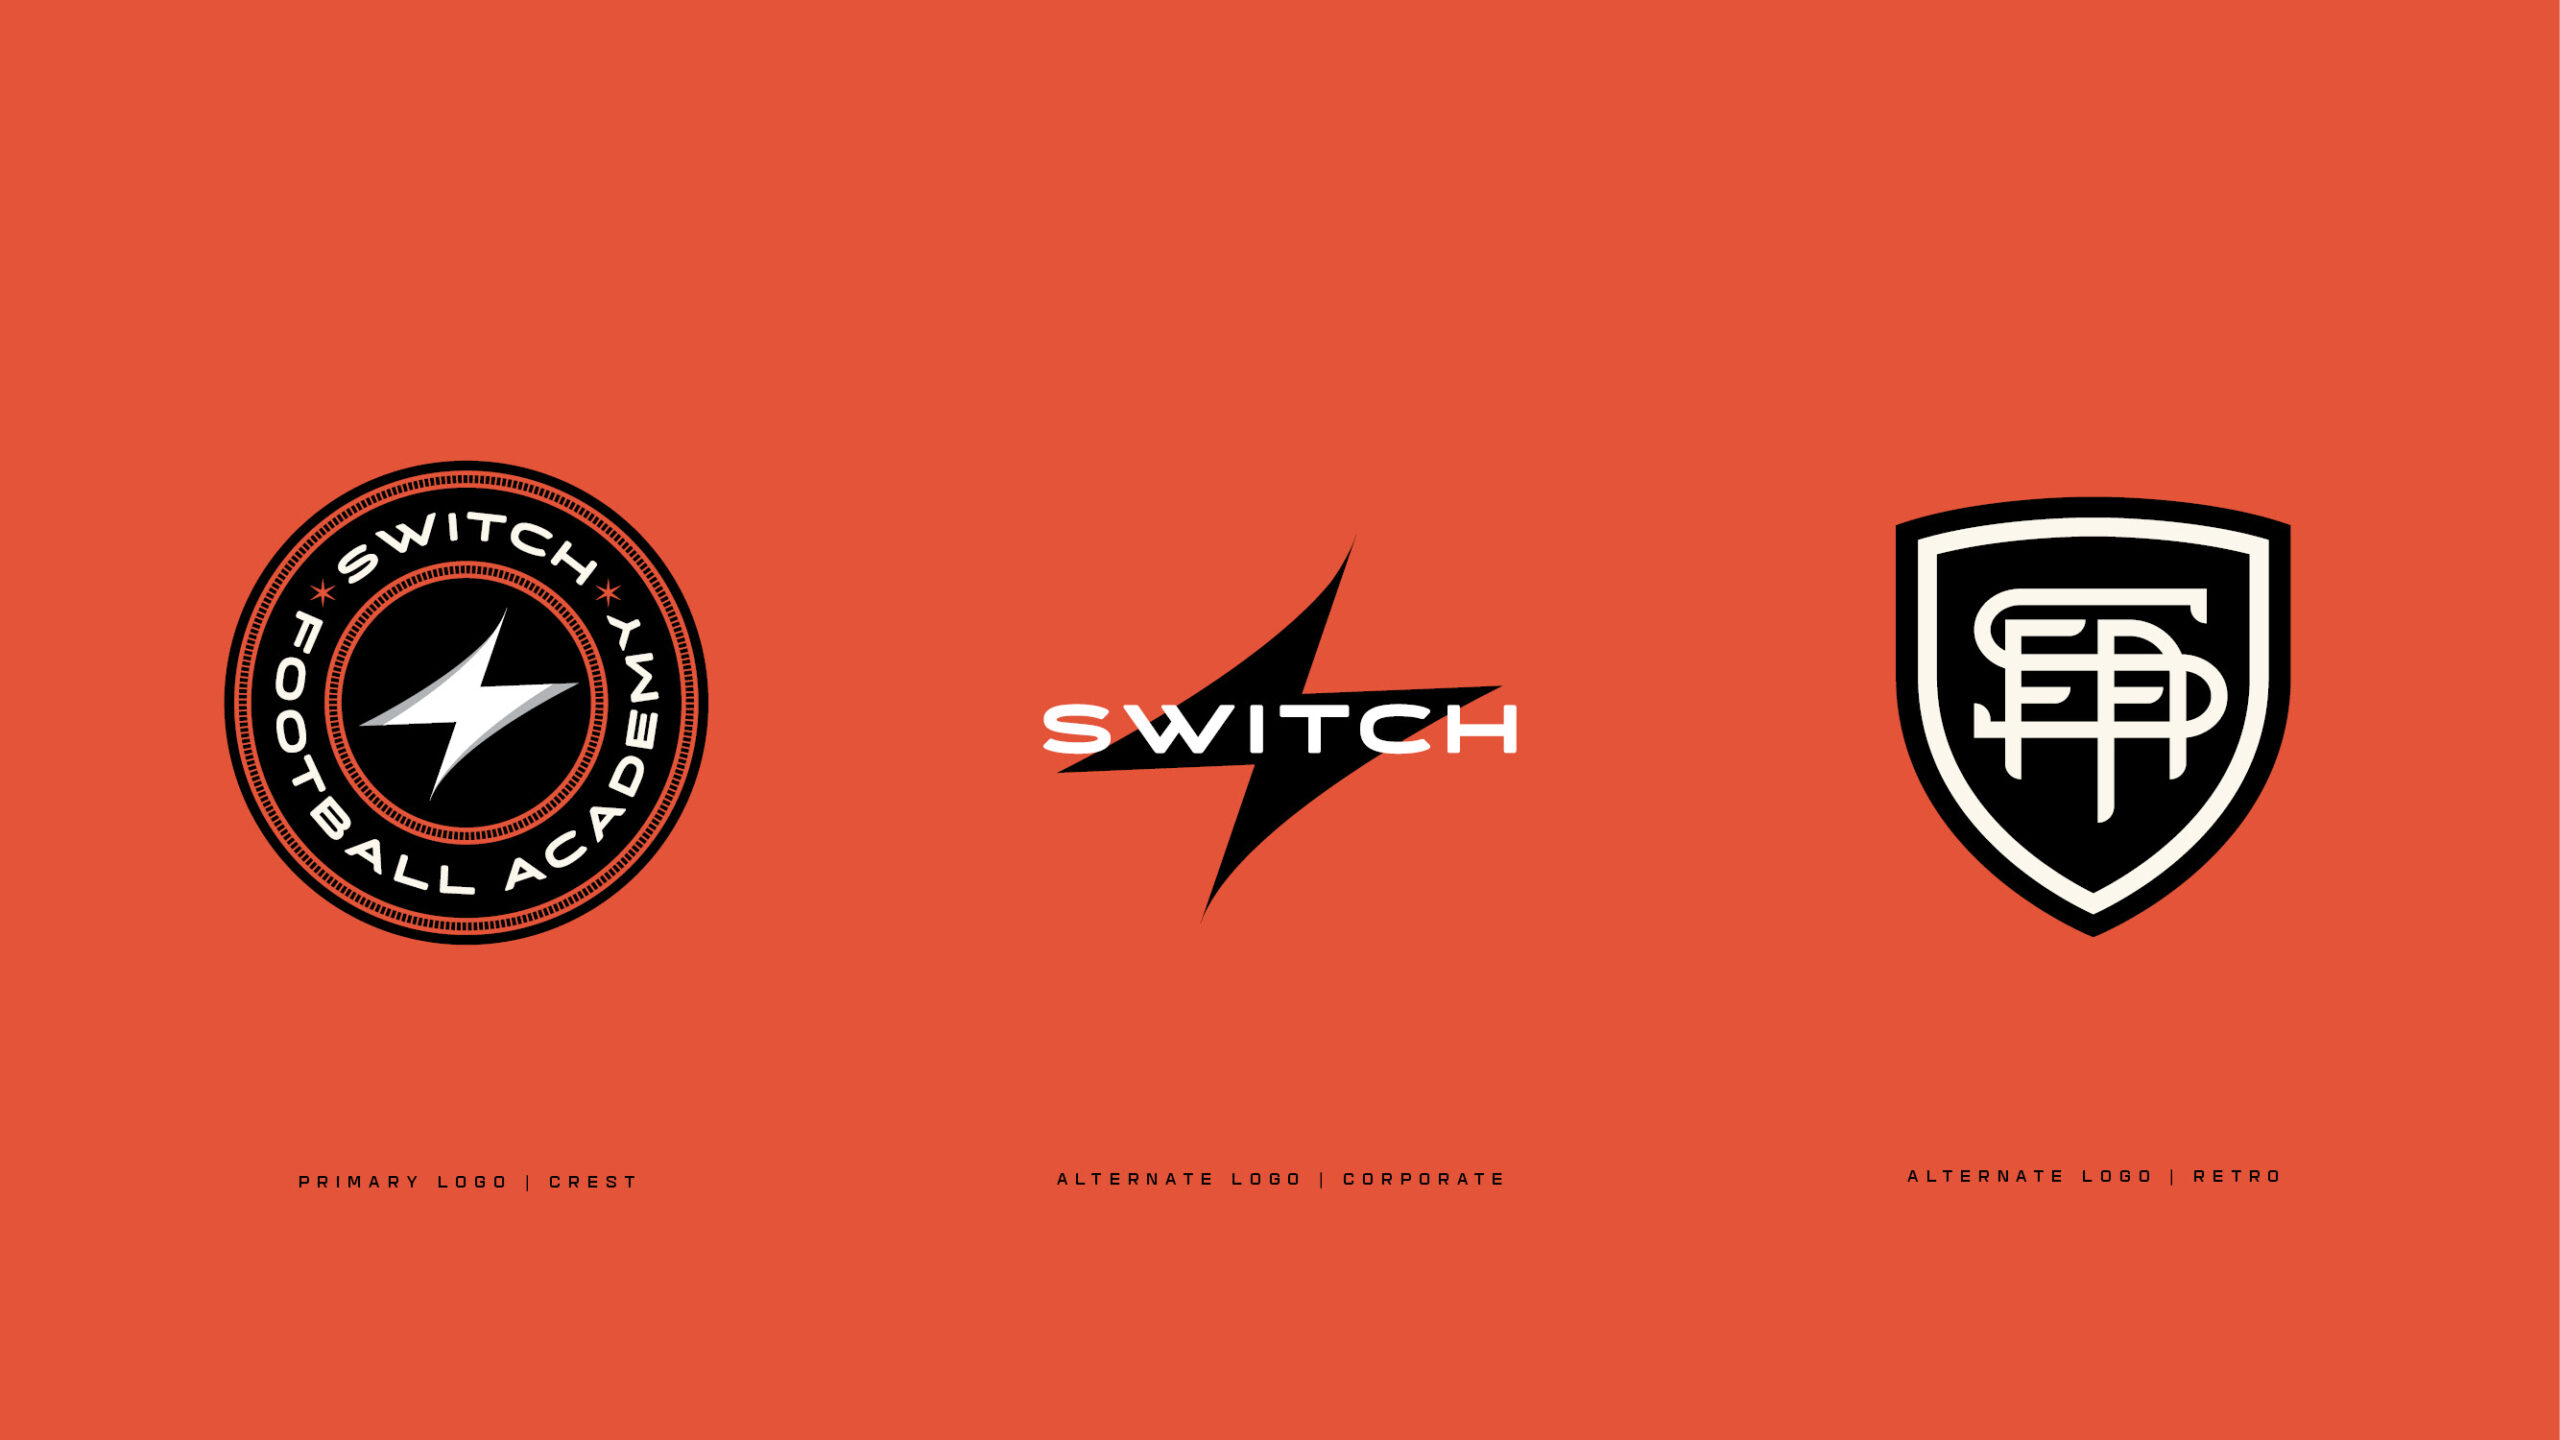 201902-Nacione-Branding-Switch-Football-Academy17